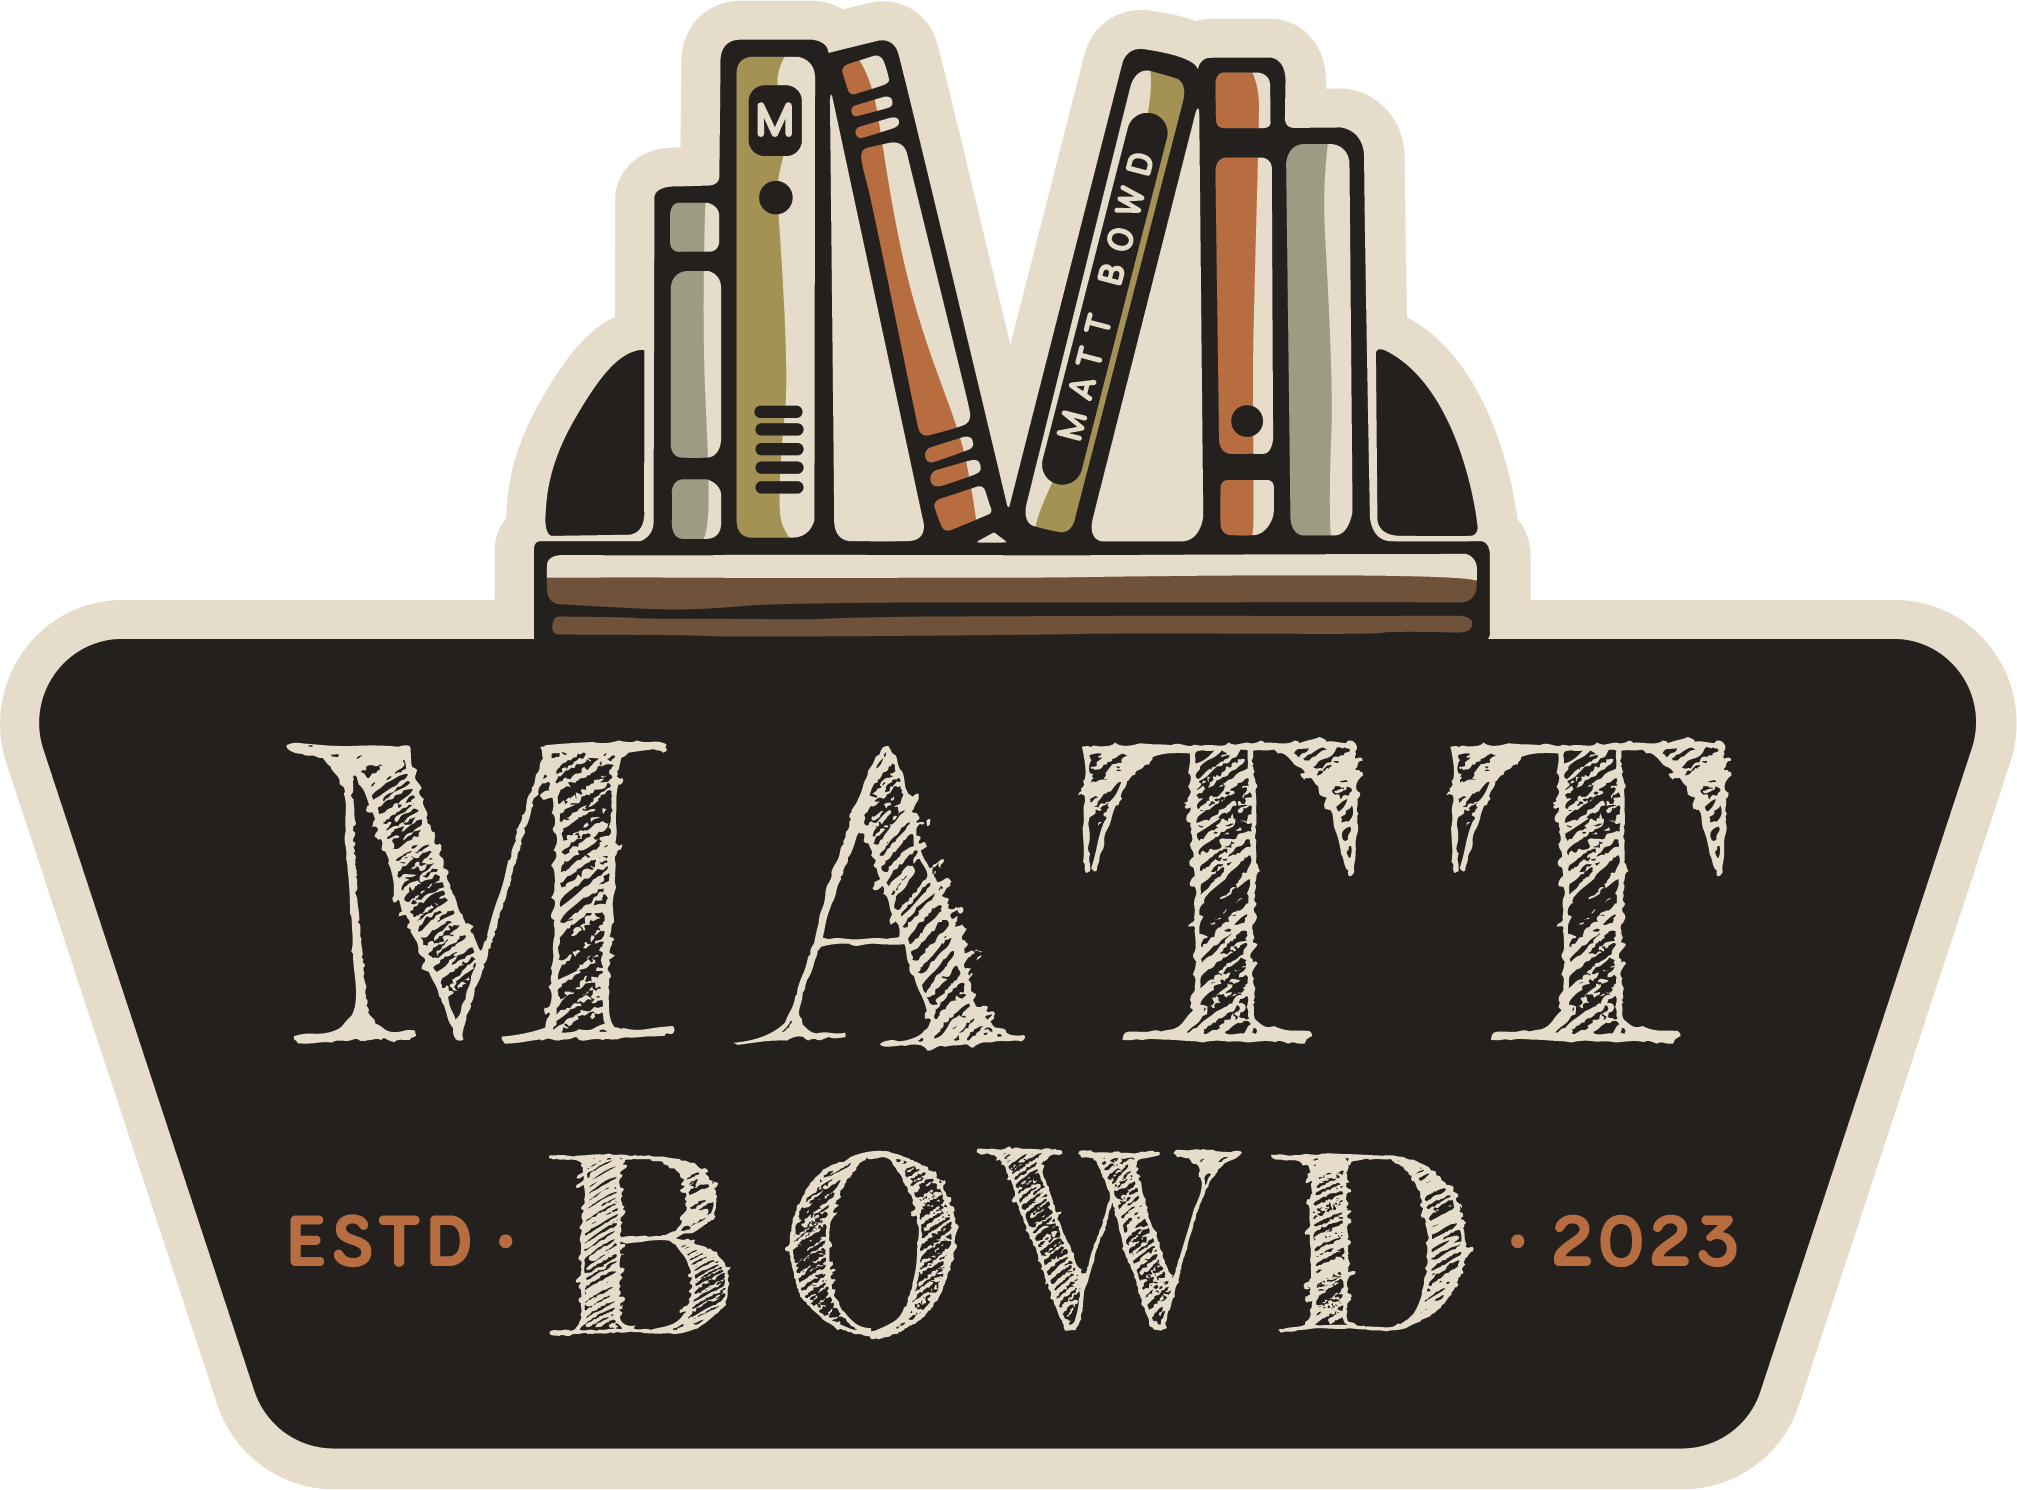 mattbowd.com